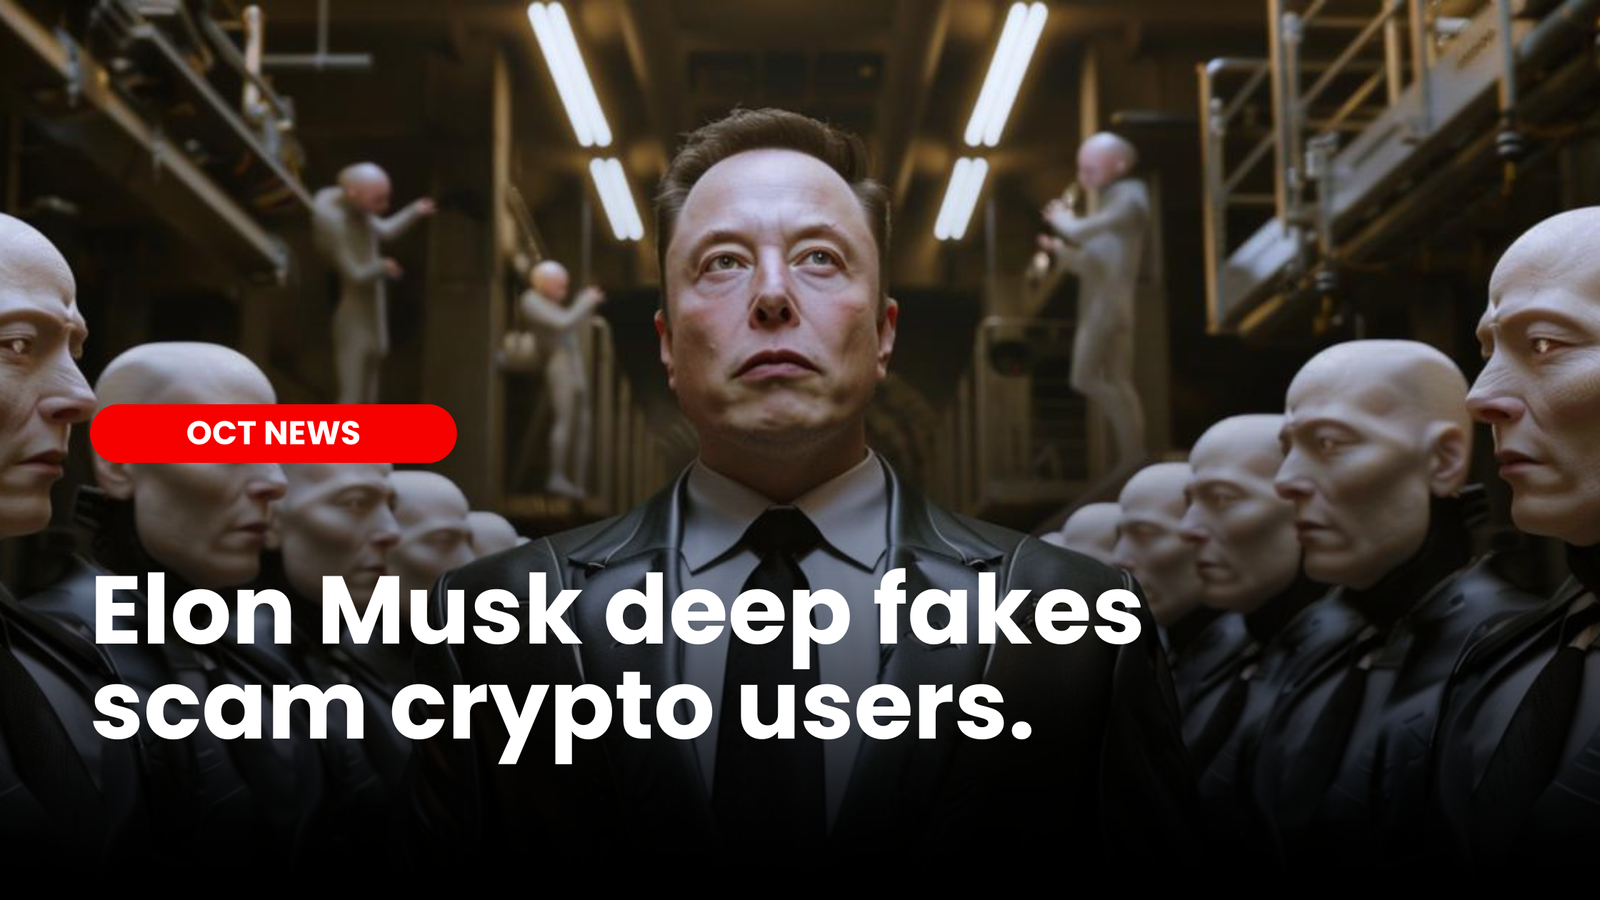 Elon Musk Deep Fakes scam crypto users image